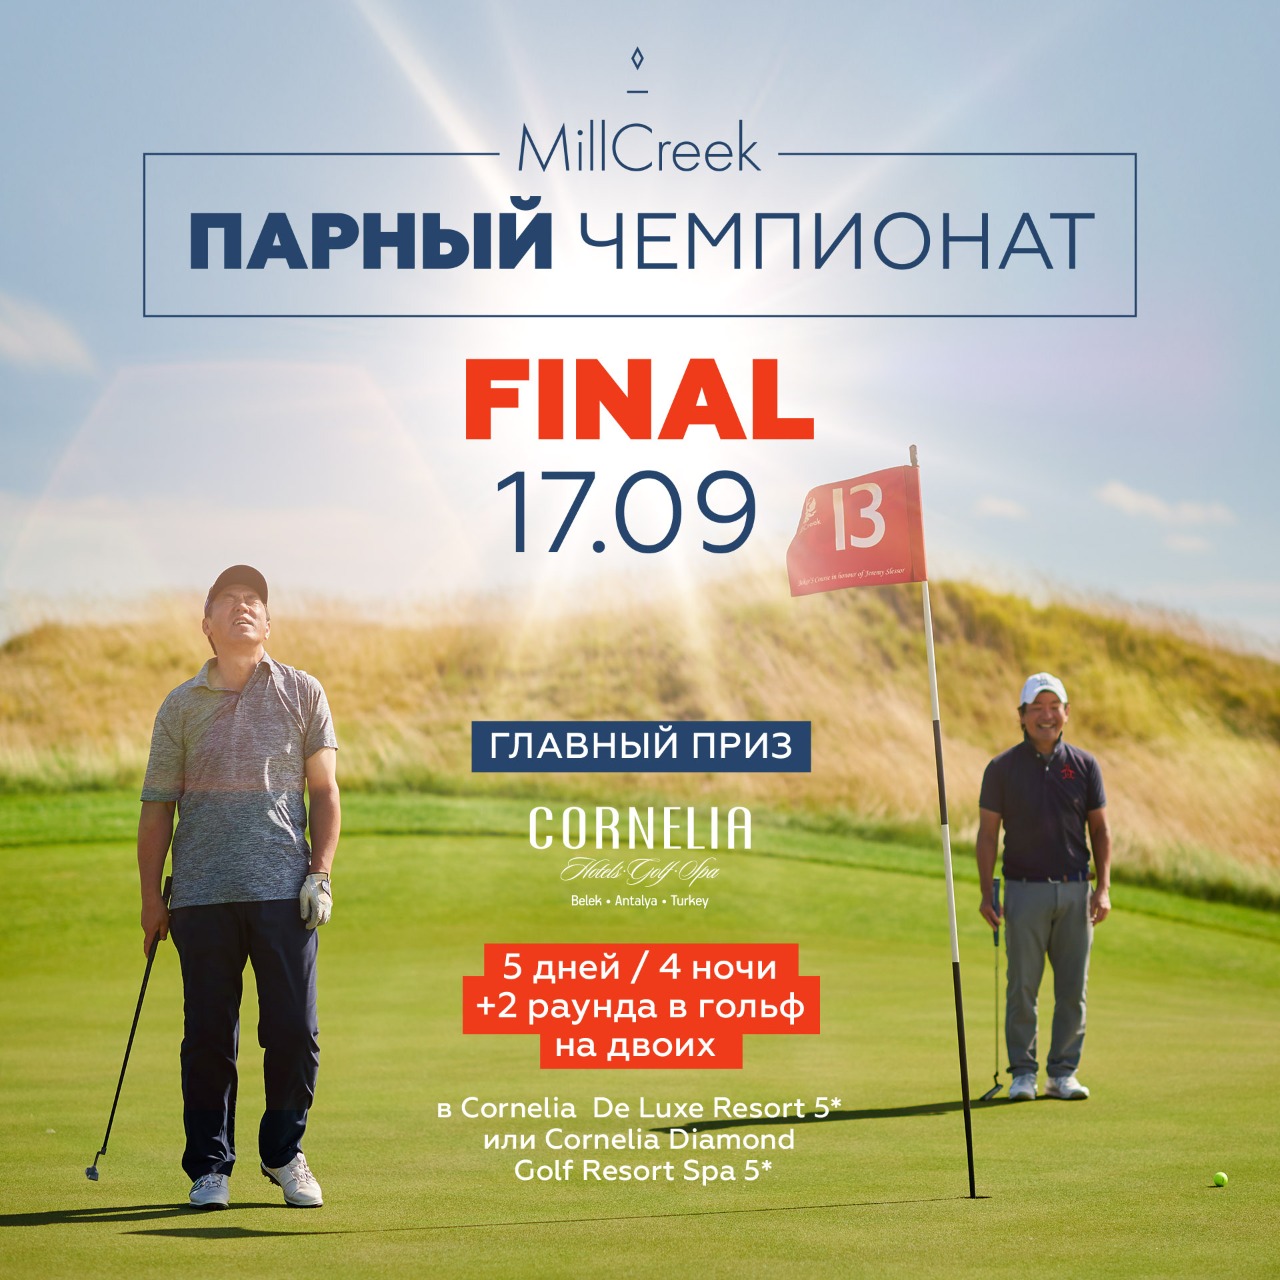 Финал Парного Чемпионата в MillCreek Golf Club 17.09.